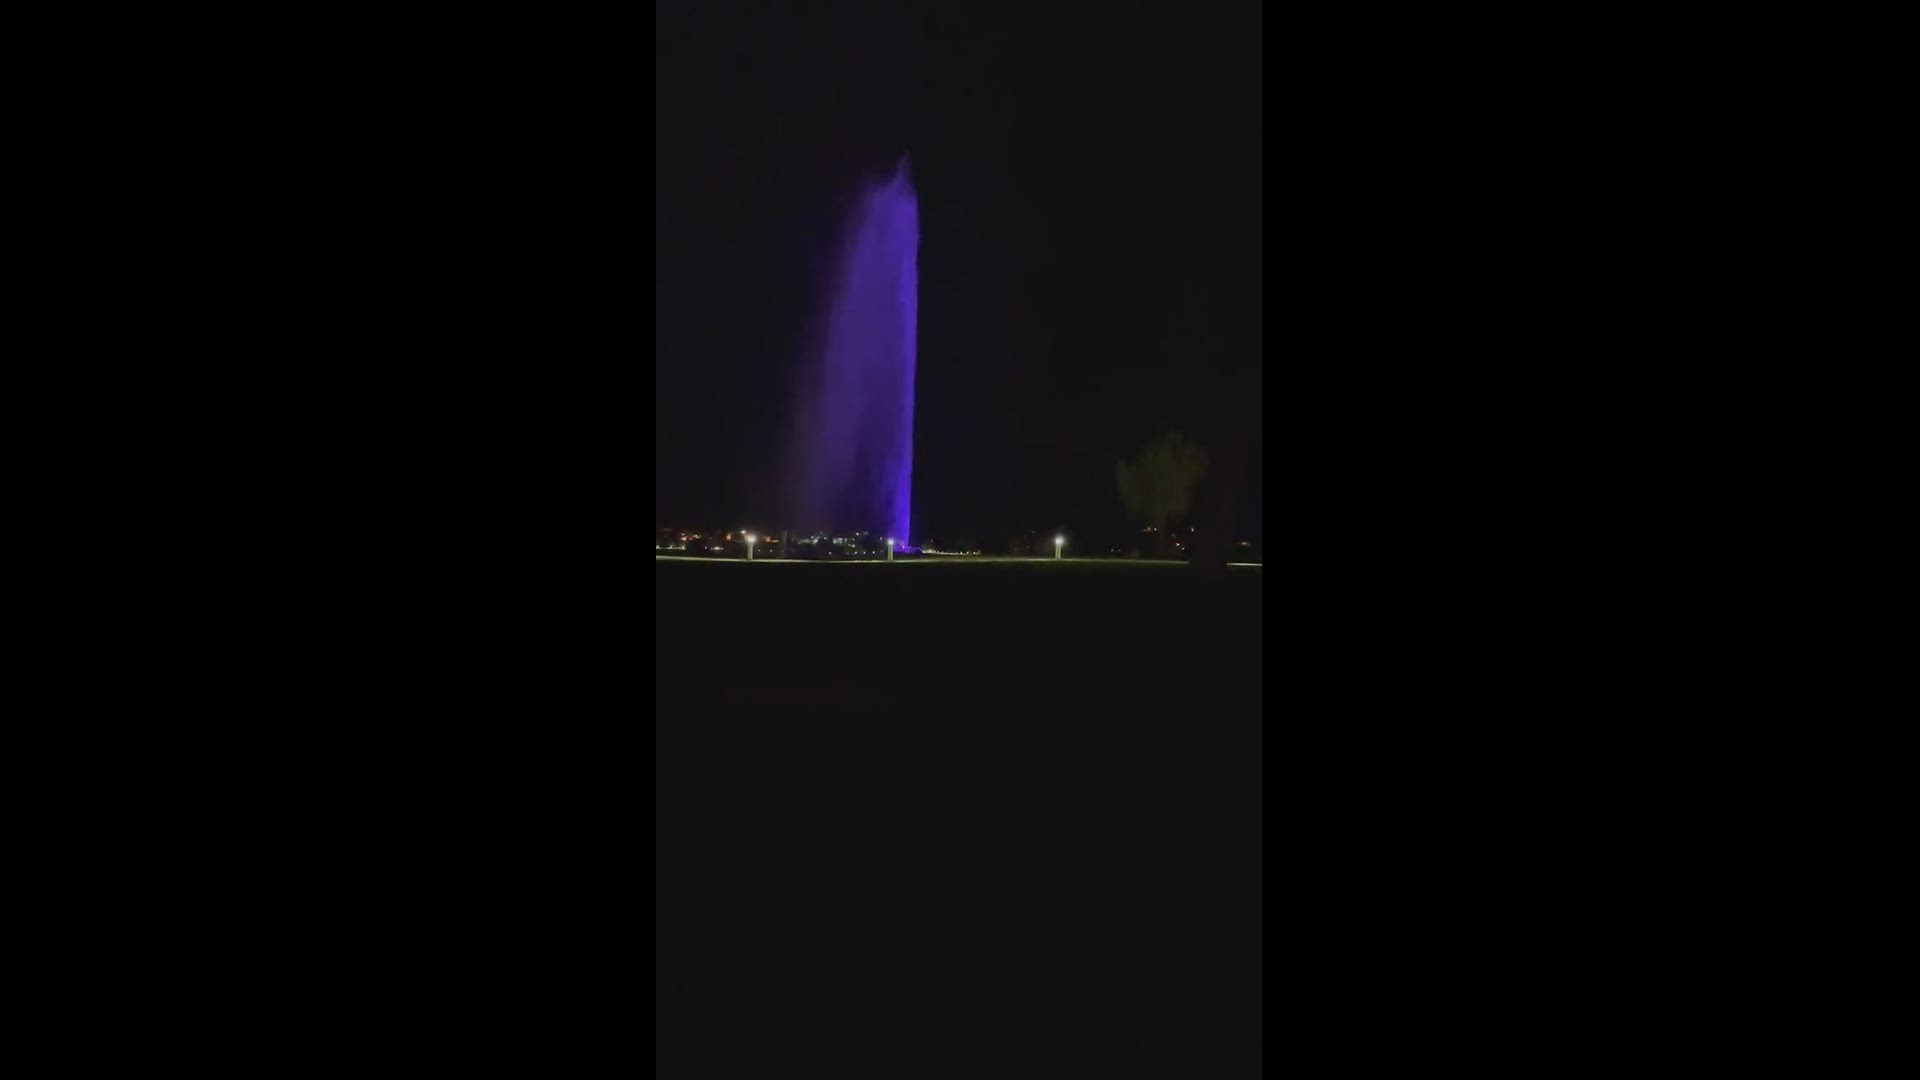 The fountain in Fountain Hills glows purple and orange.
Credit: Celia Warren